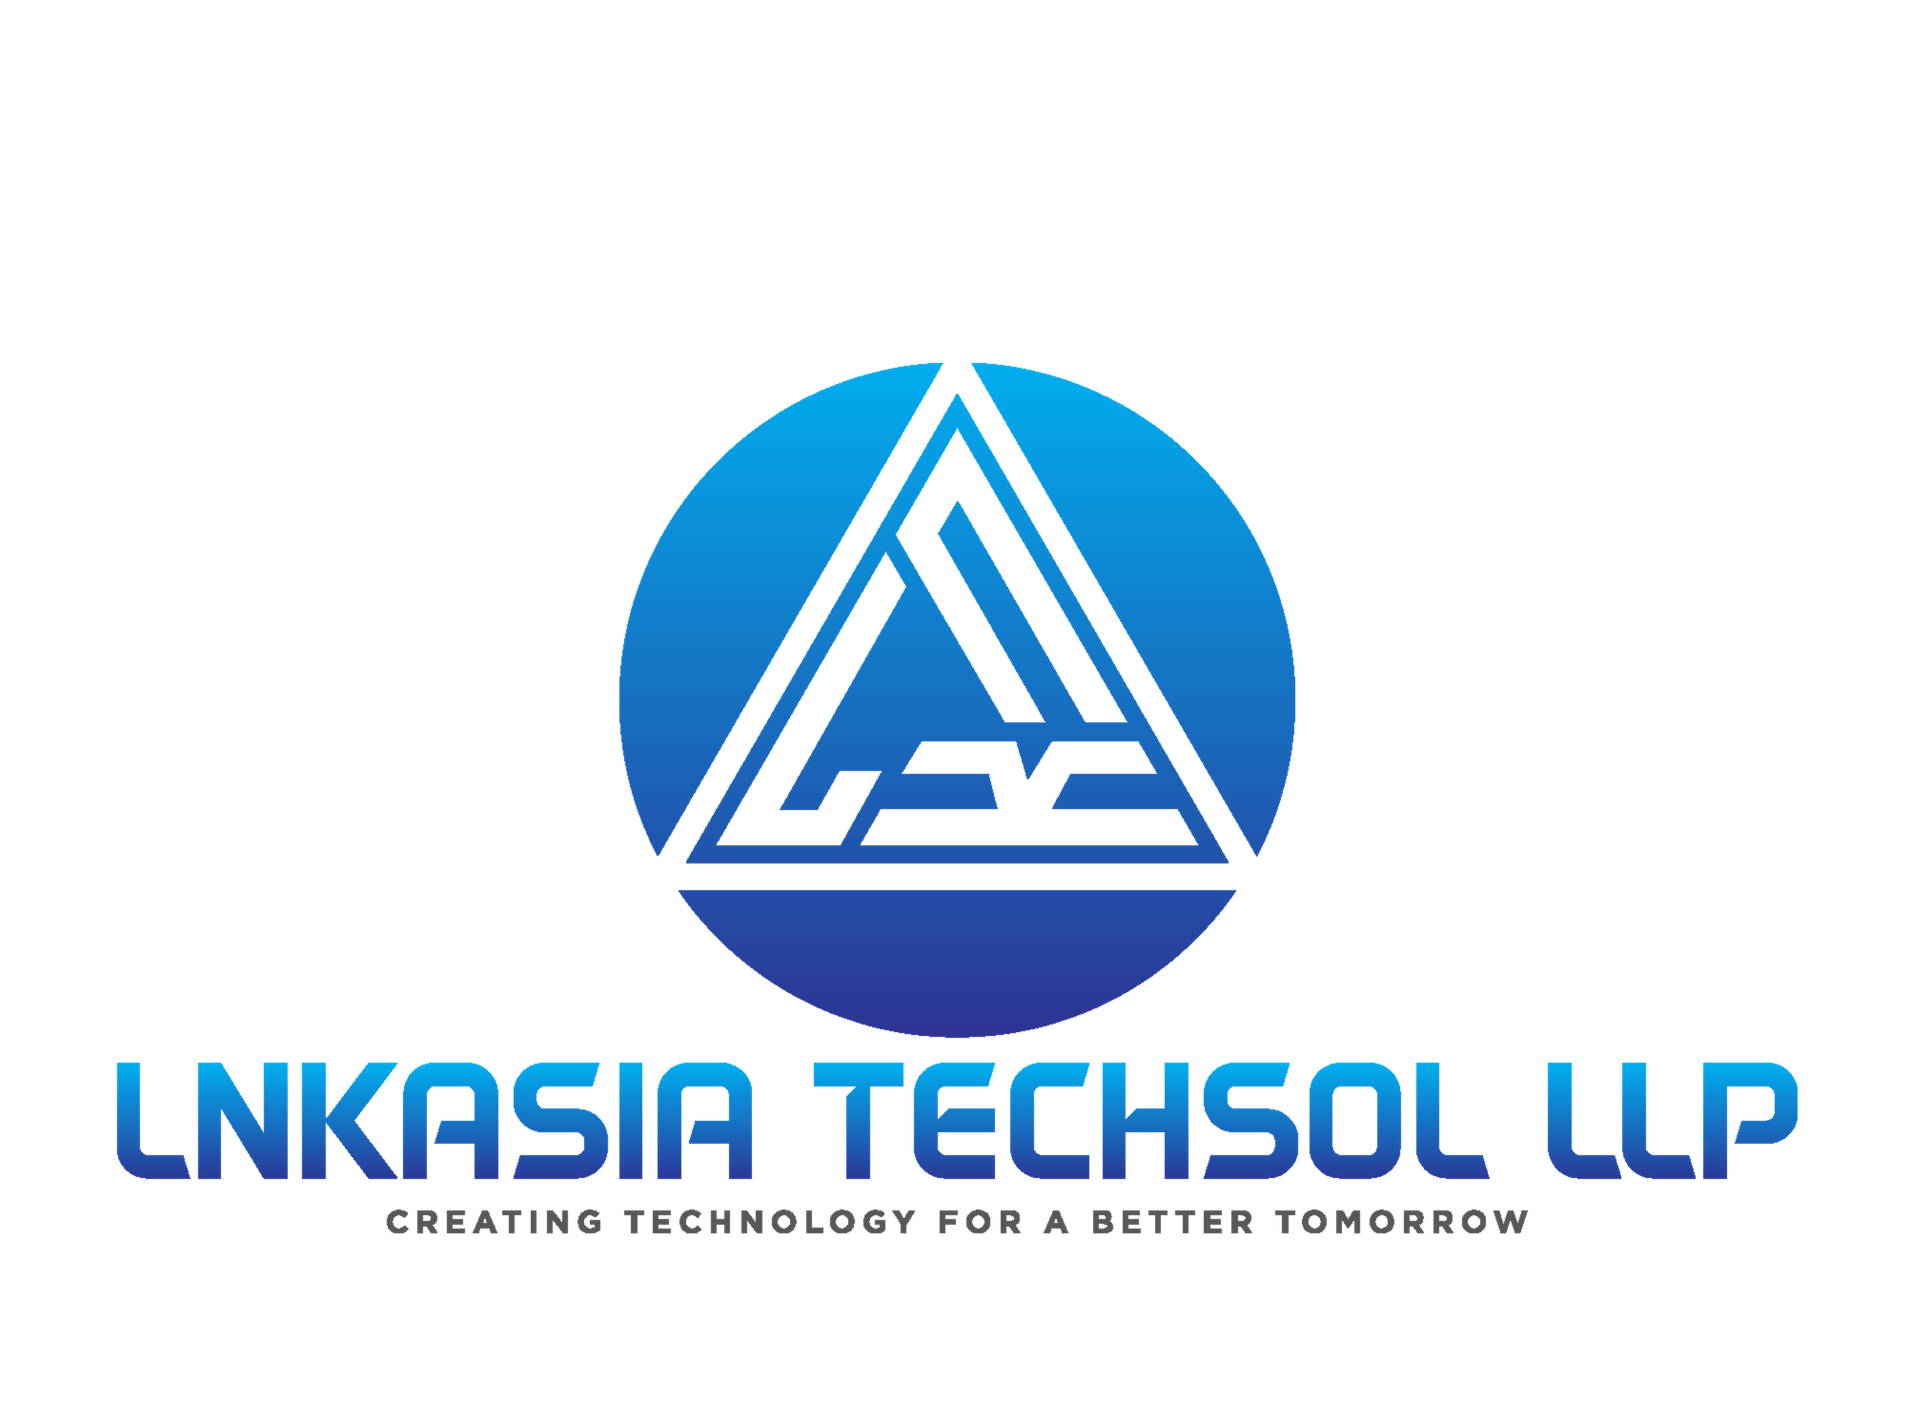 LNK Asia Techsol LLP